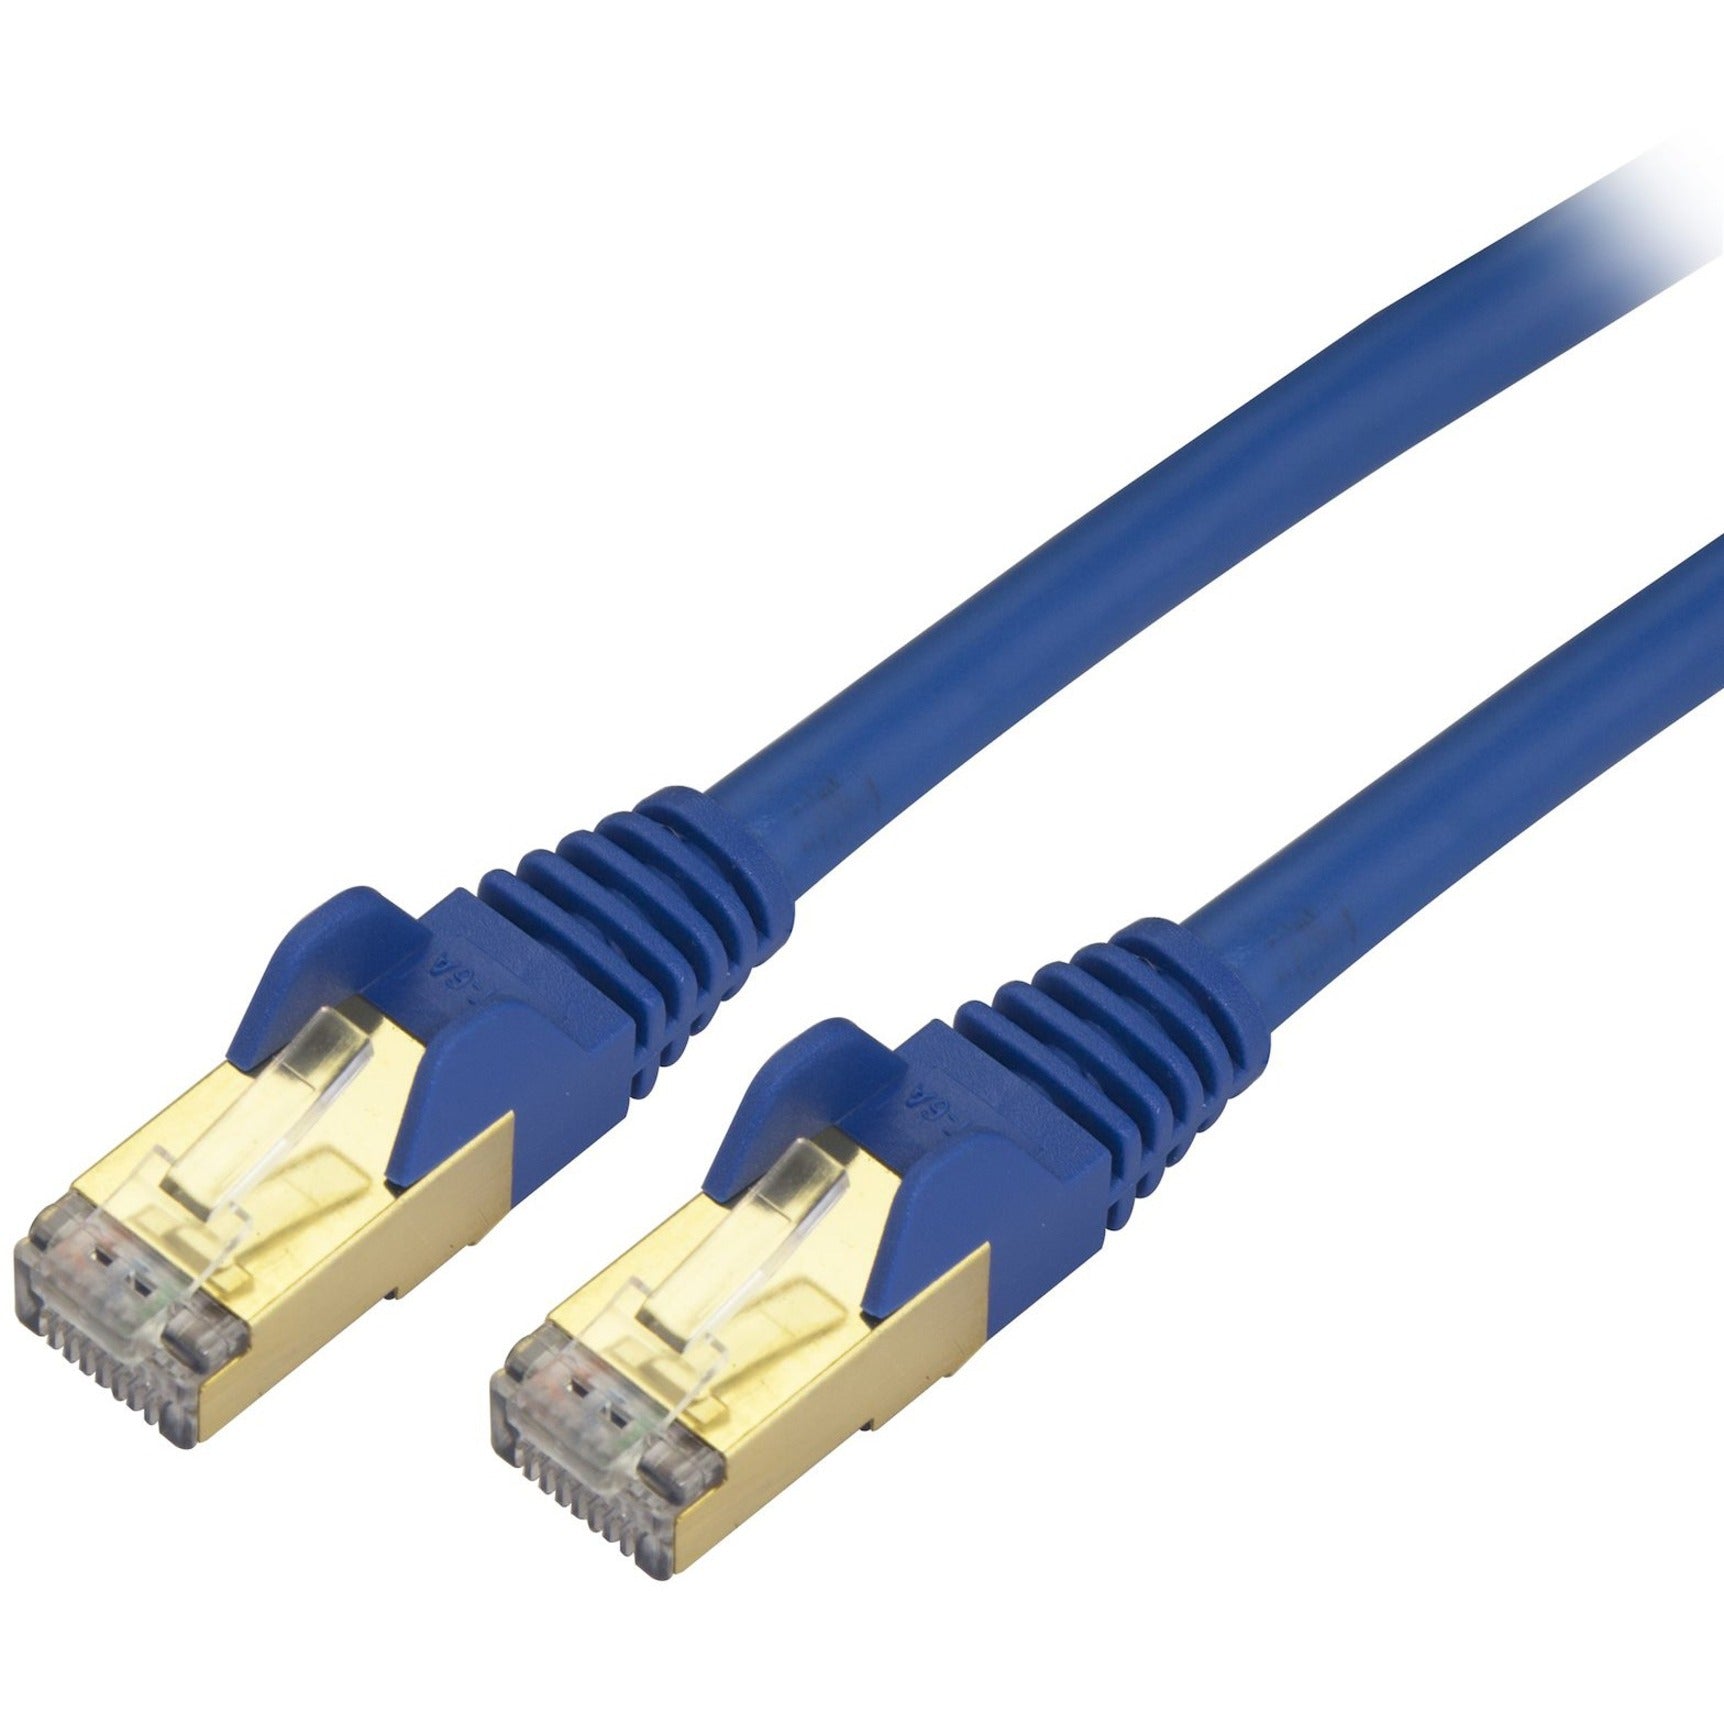 StarTech.com C6ASPAT8BL Cat6a Ethernet Patch Cable - Shielded (STP) - 8 ft., Blue, Snagless RJ45 Ethernet Cord